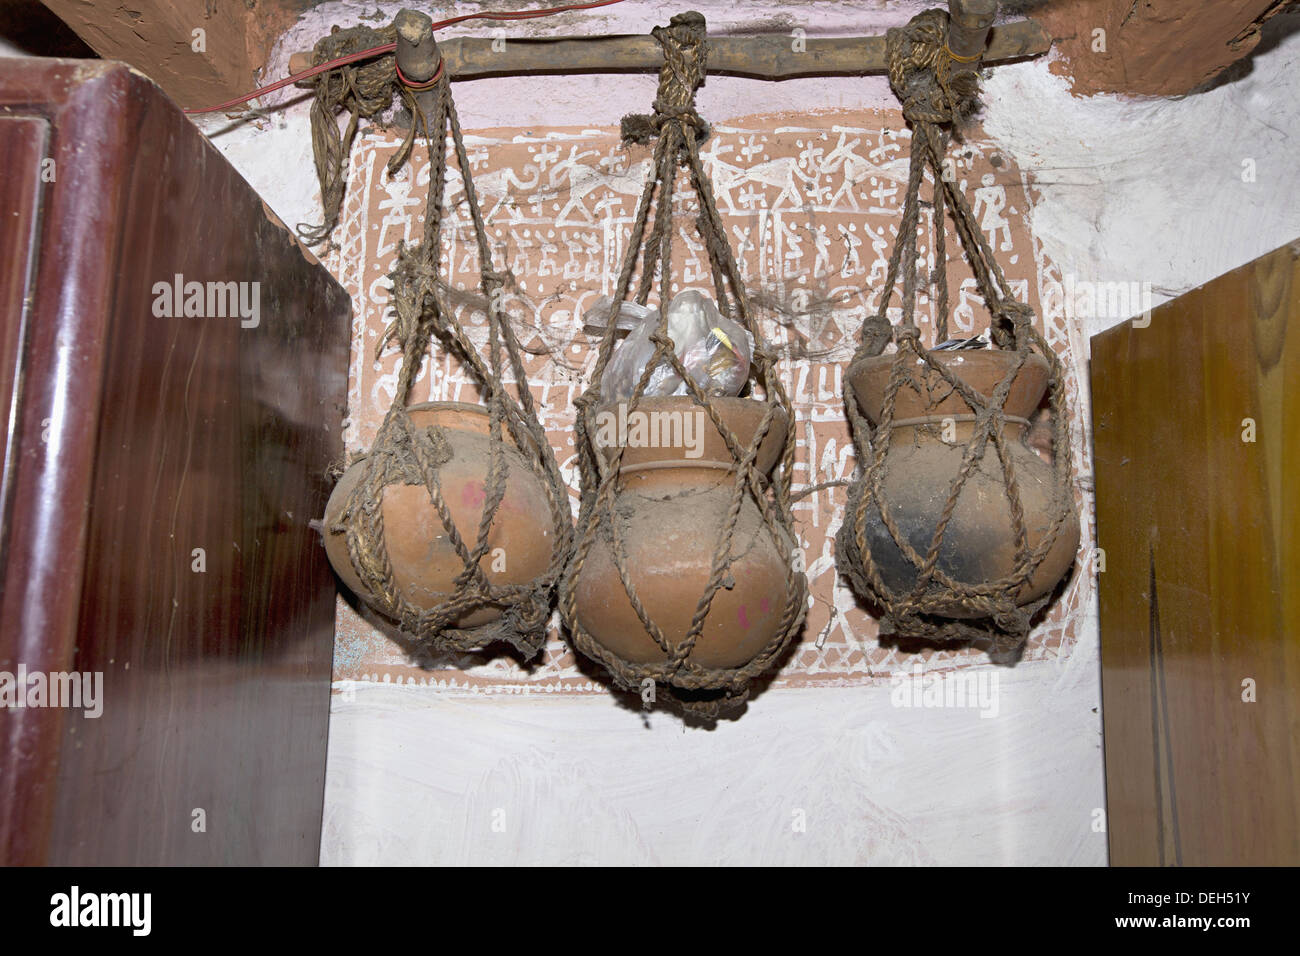 Hanging pots, Orissa, India Stock Photo